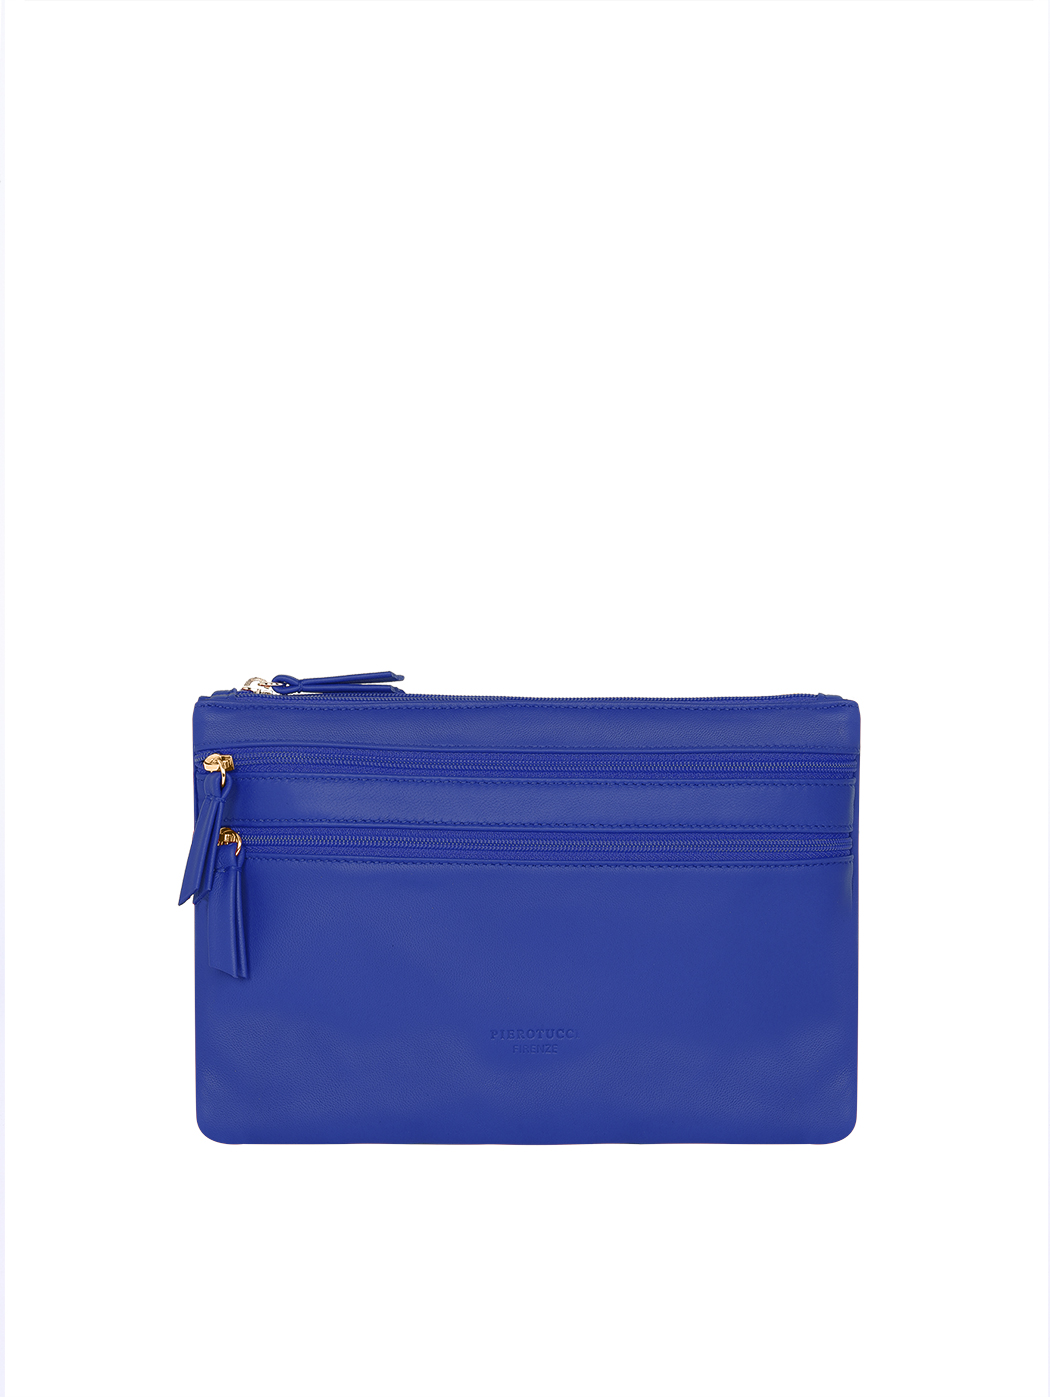 Blue Convertible Crossbody Clutch Bag